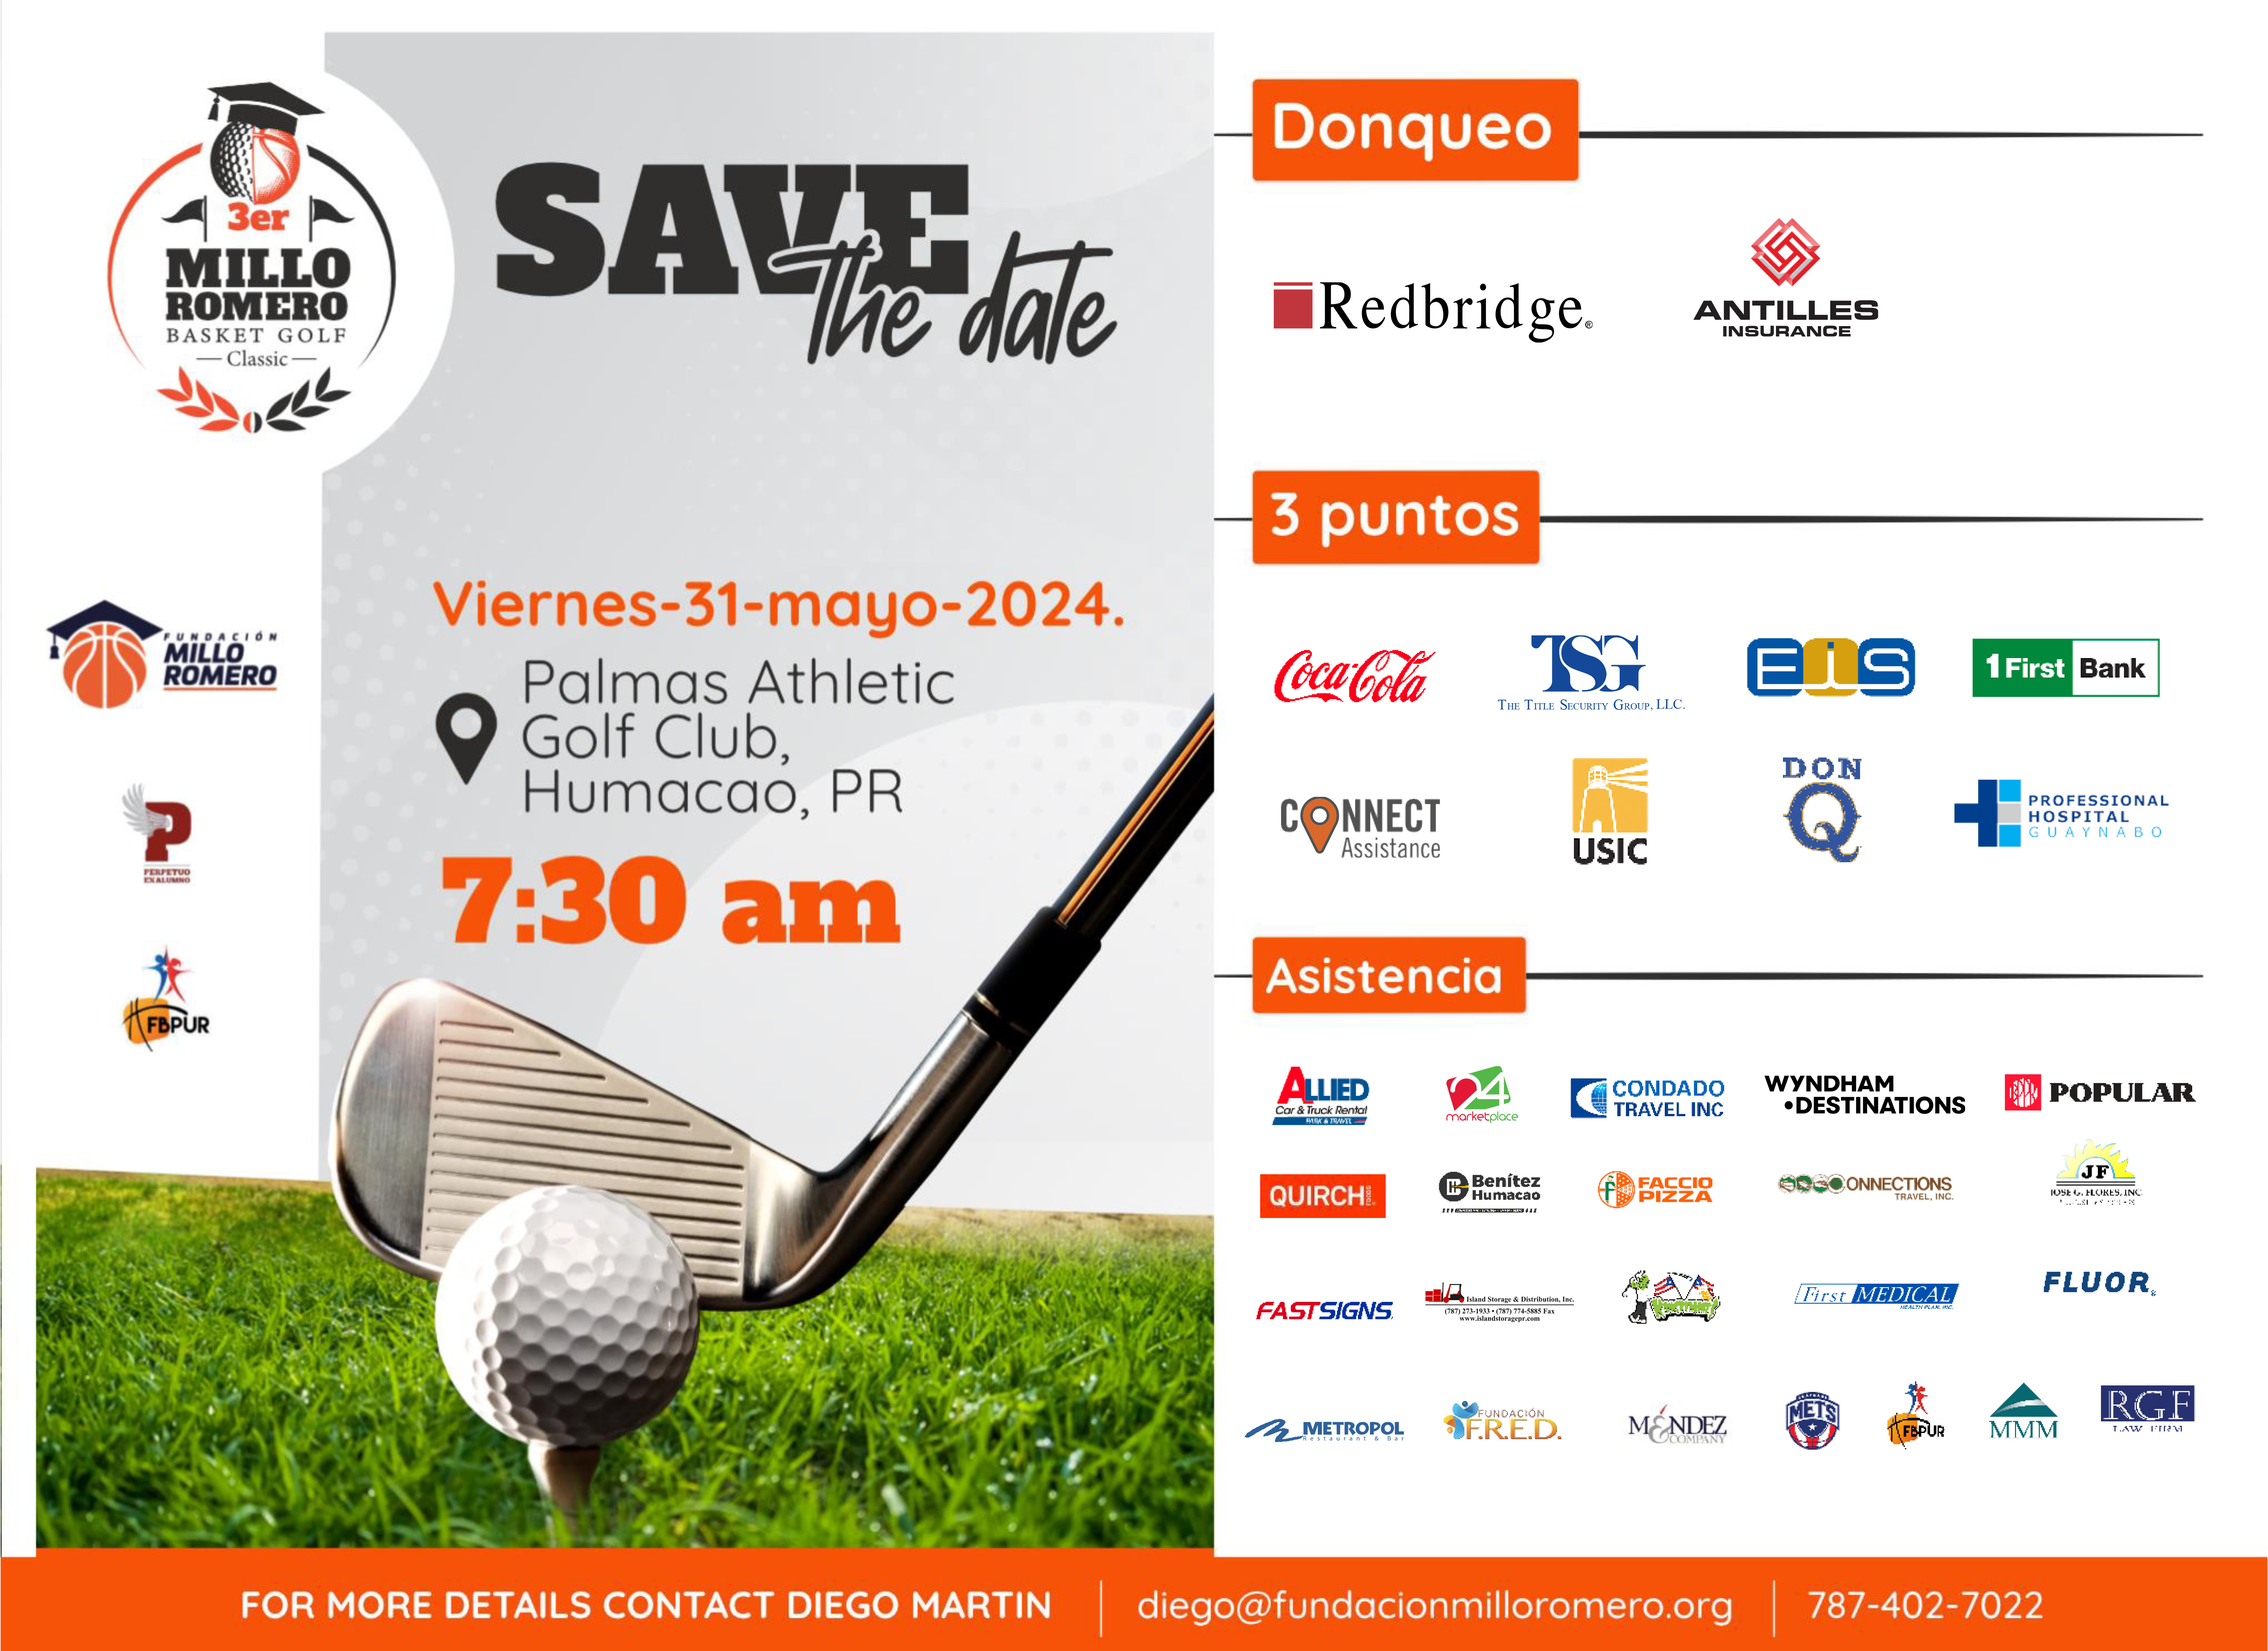 FMR - 3er. Millo Romero Basket-Golf Classic 2024 - Save-the-Date 11-06-2023.jpg